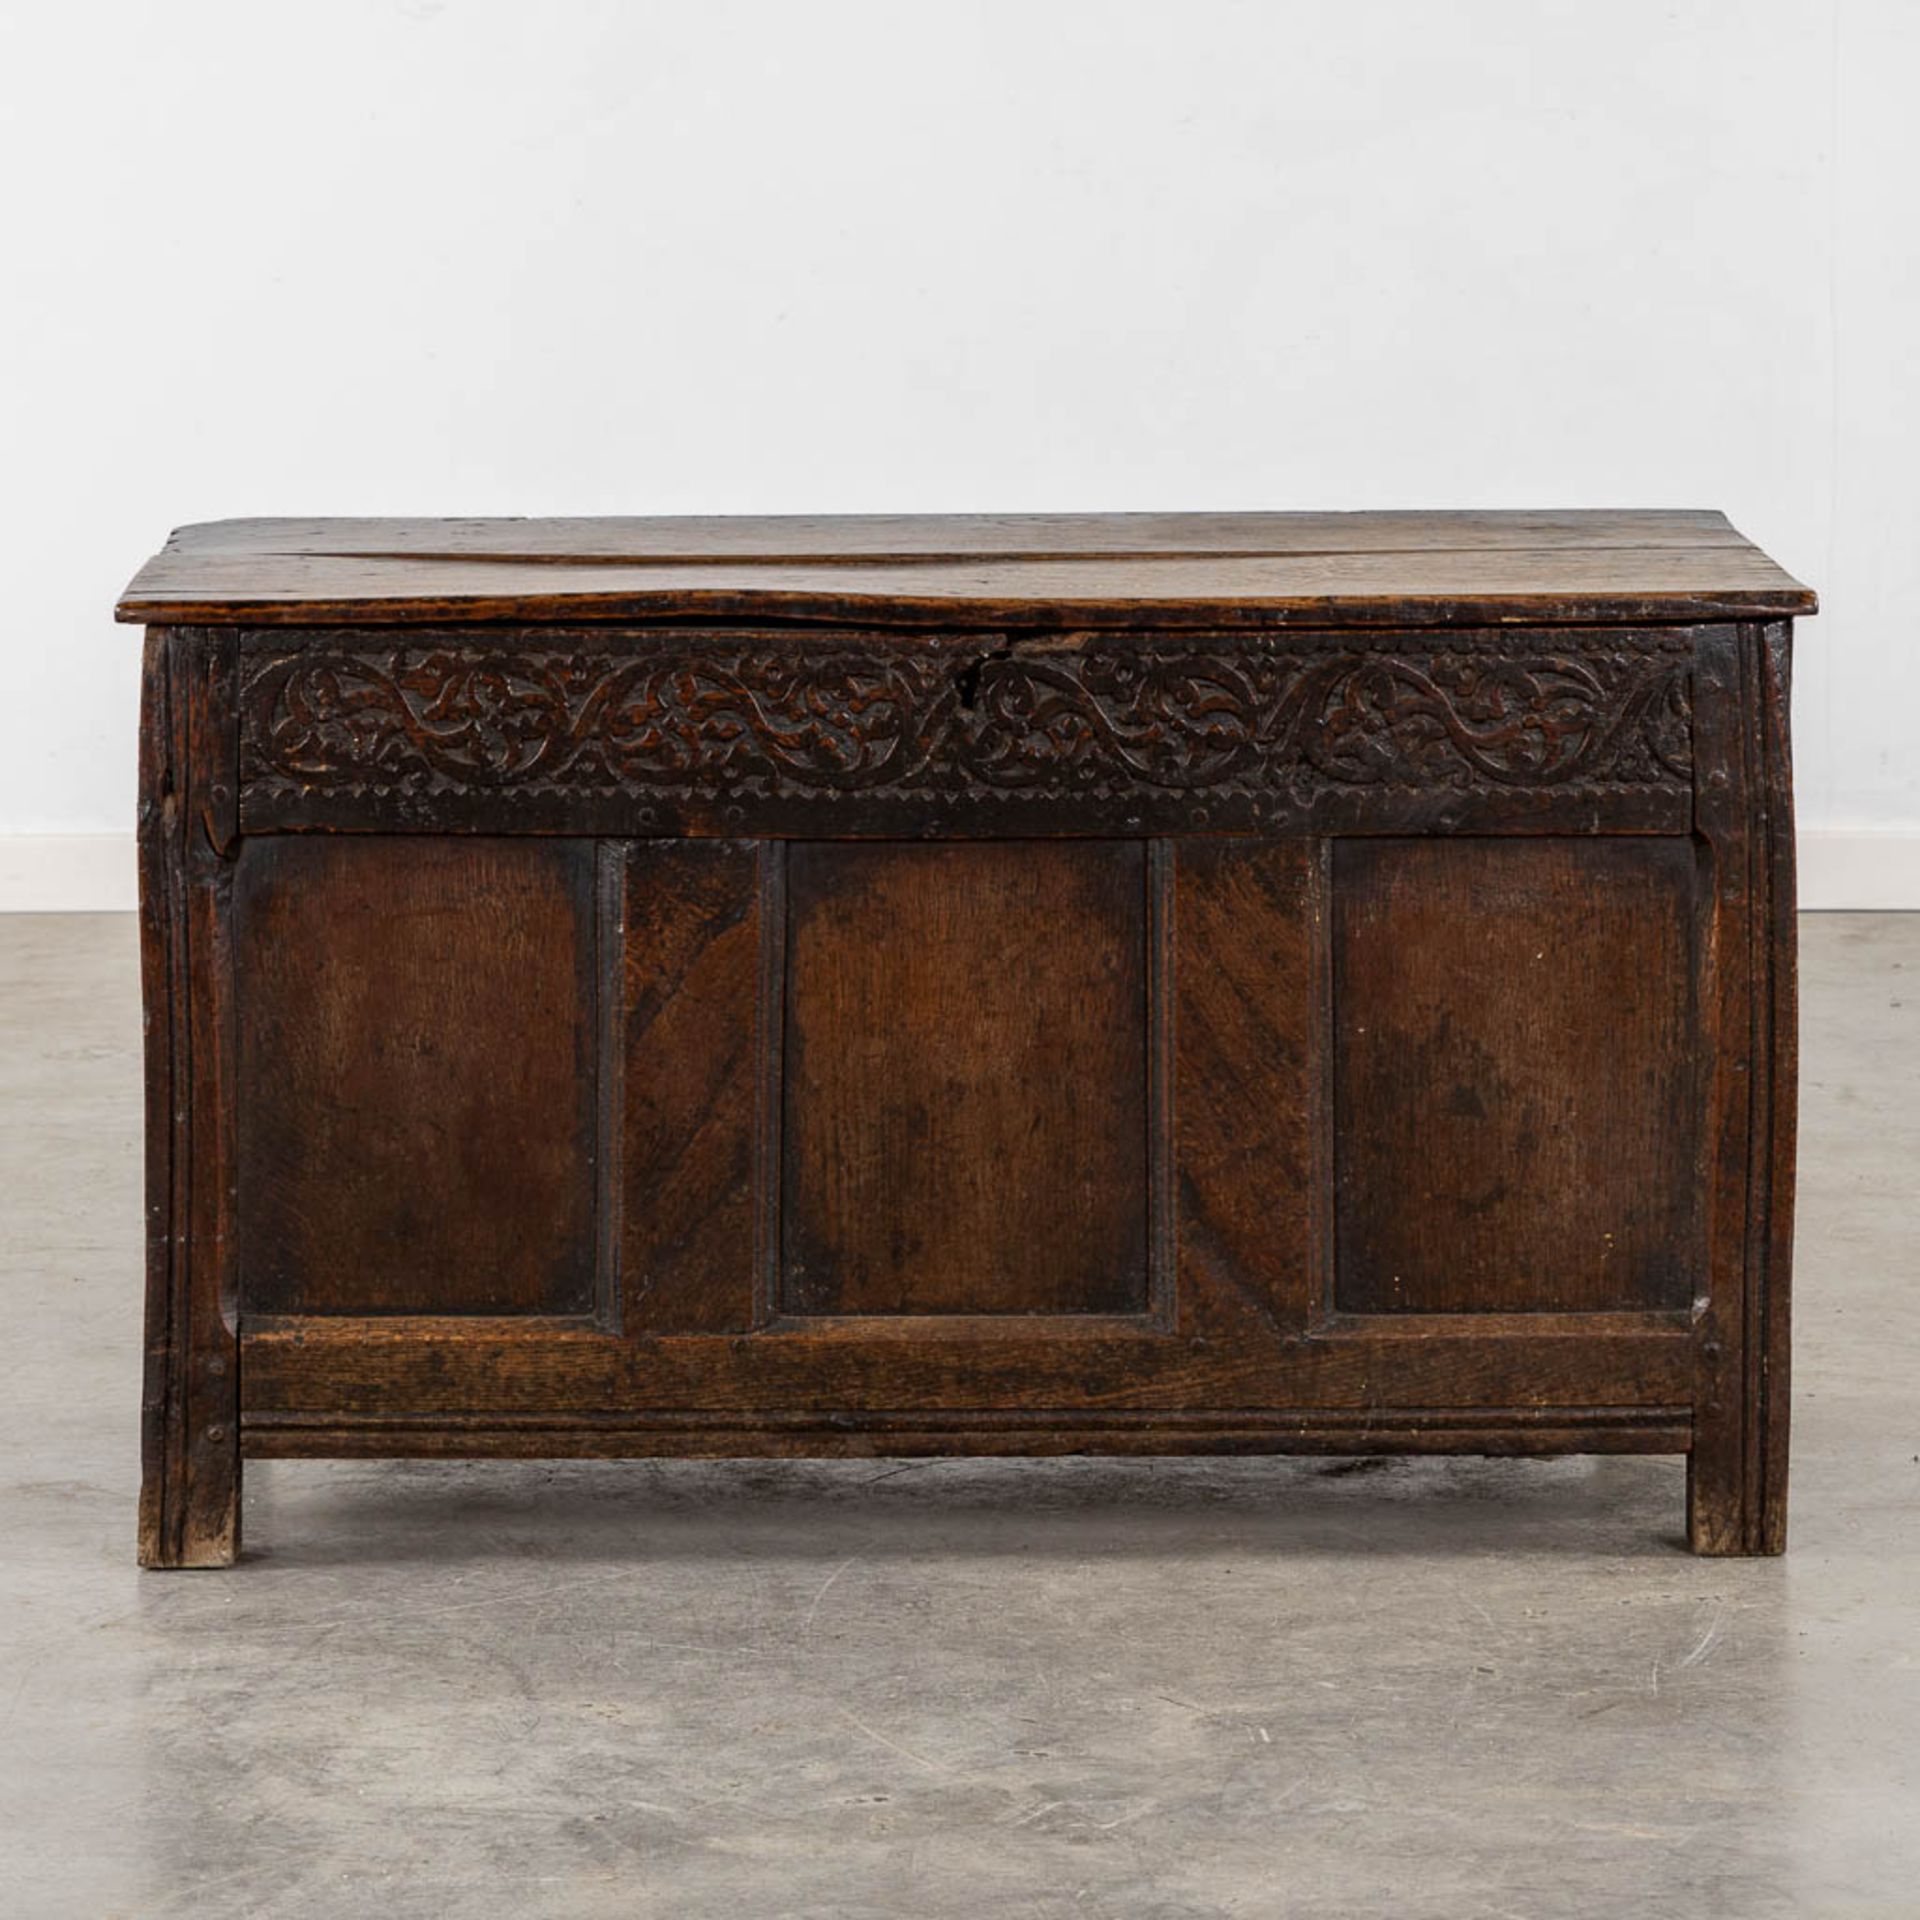 An antique wood-sculptured chest, 18th C. (L:52 x W:98 x H:56 cm) - Bild 3 aus 9